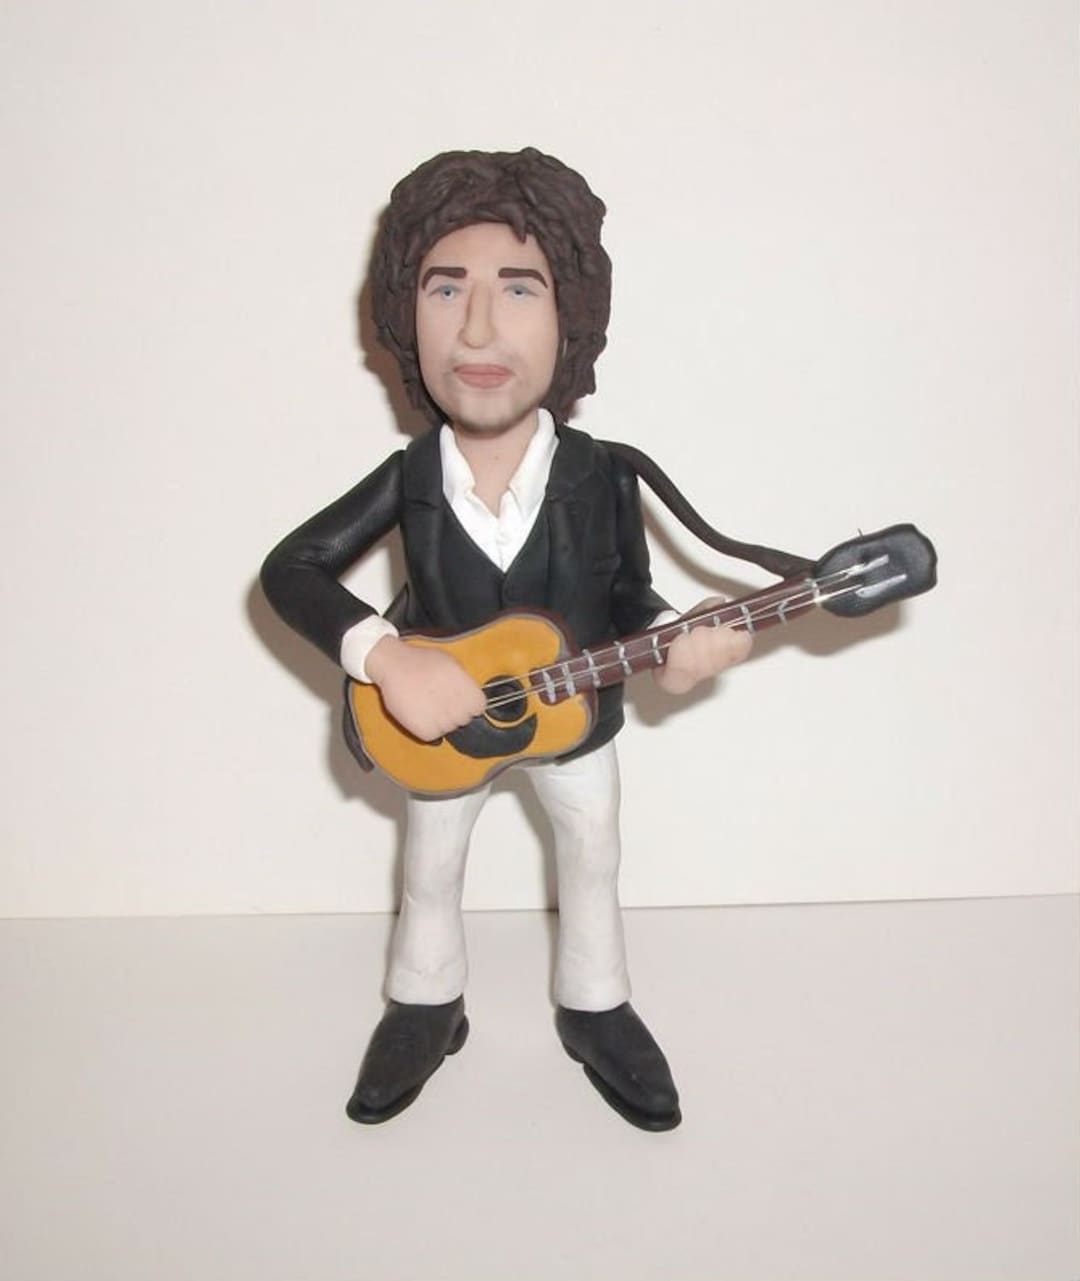 Bob Dylan Figurineblues Rock Star Doll Miniature Sculpture - Etsy